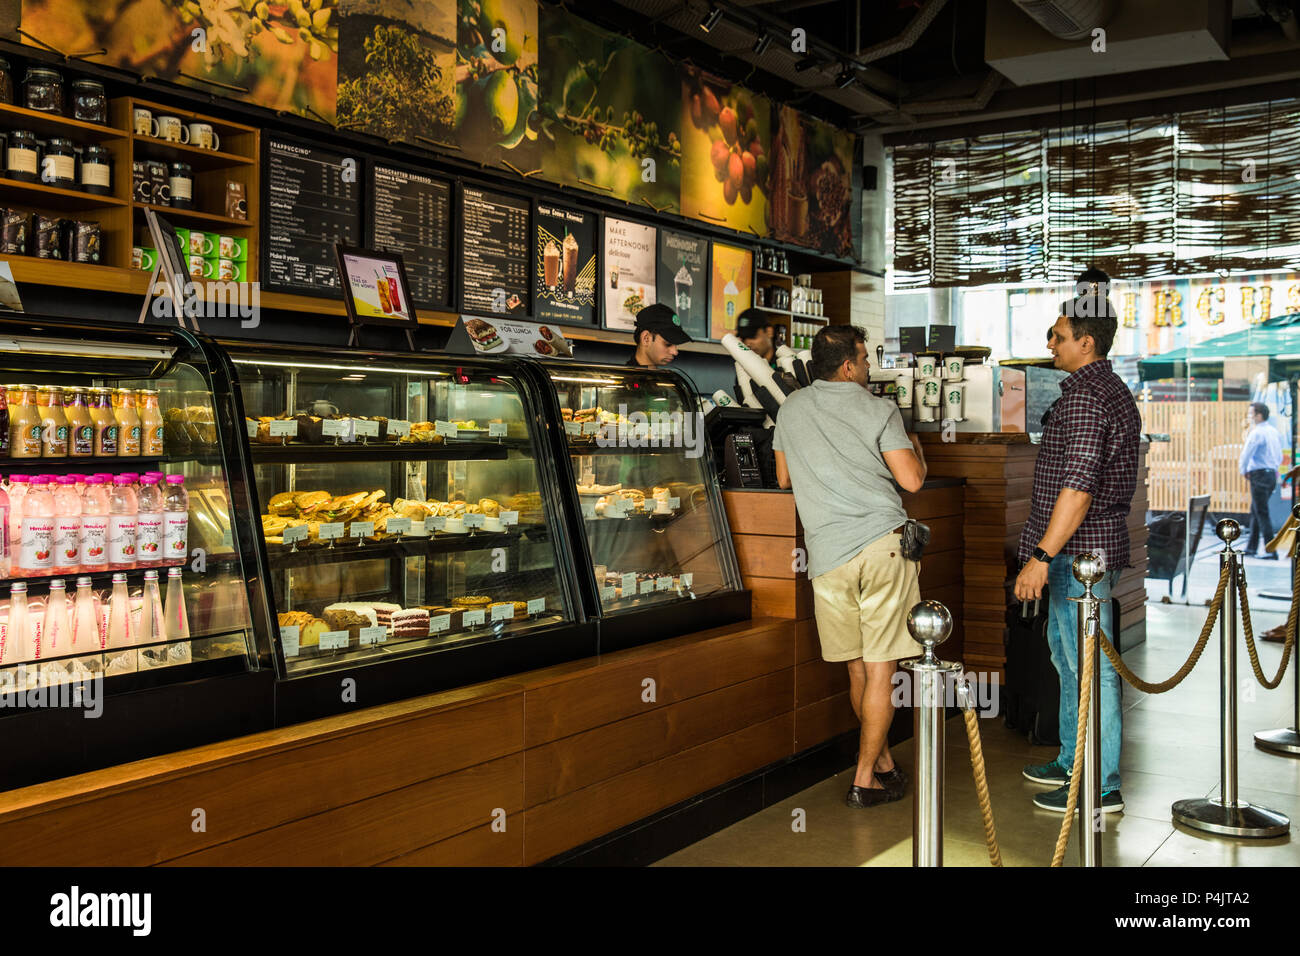 Middle age men conversing at Starbucks counter, Gurugram, India Stock Photo